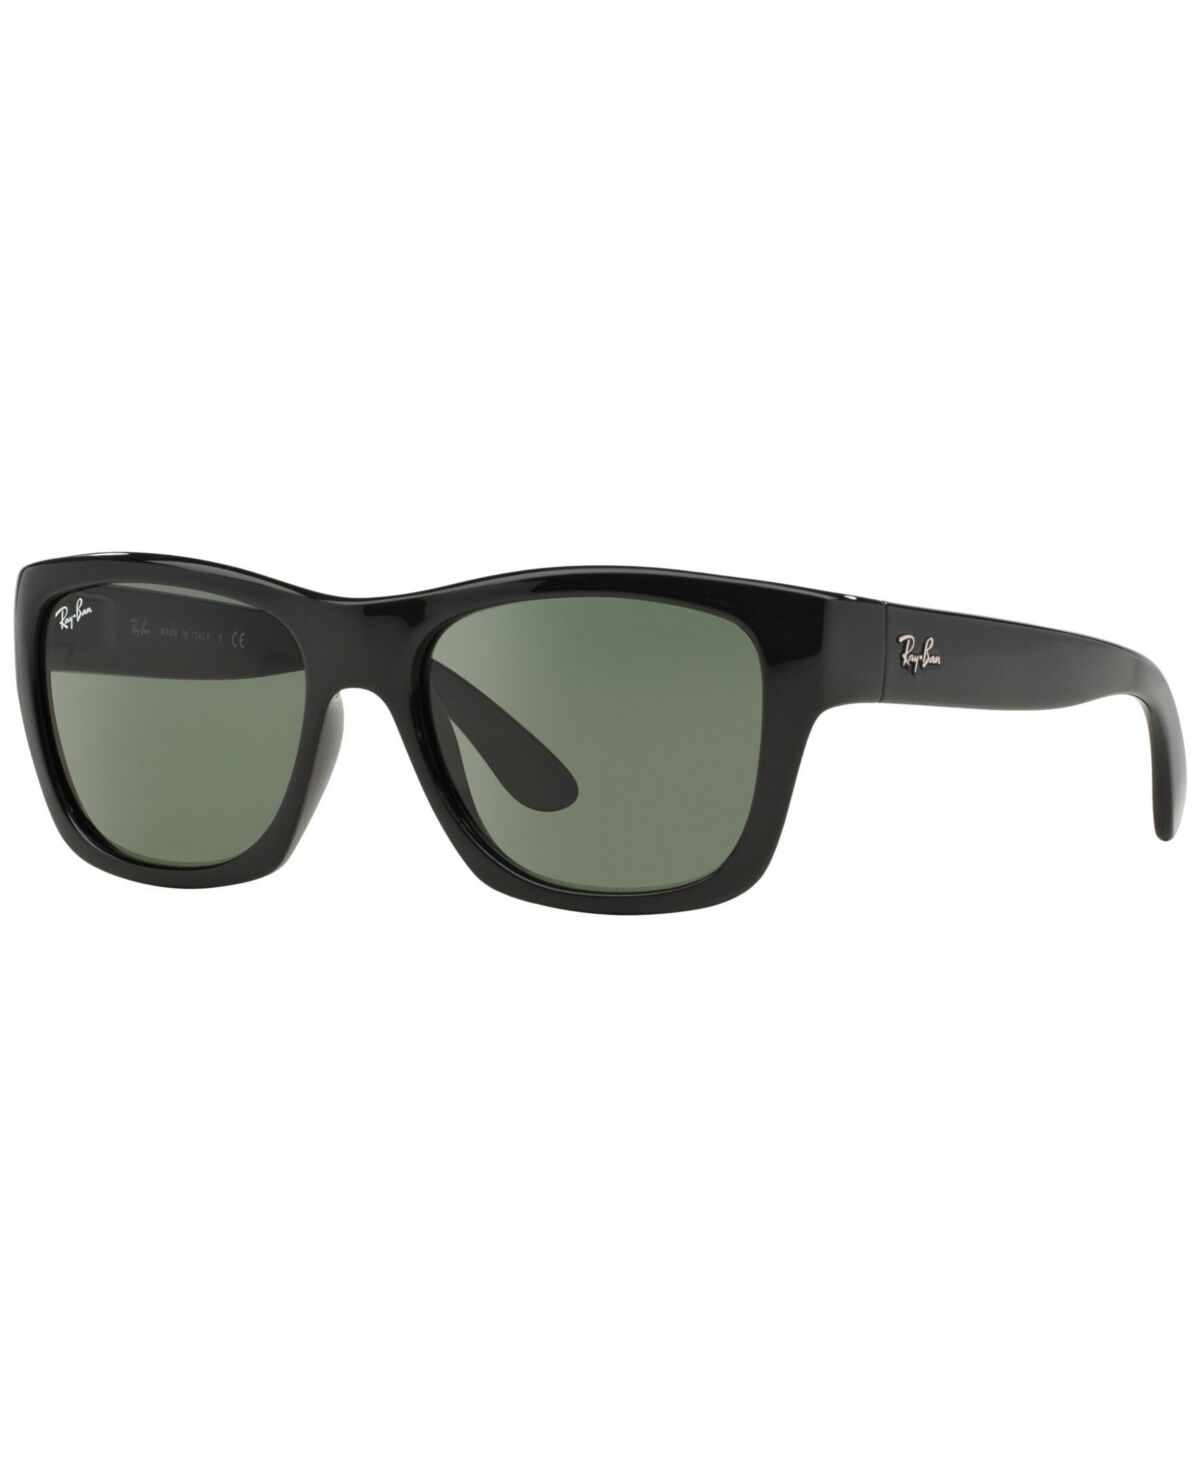 Ray-Ban Unisex Sunglasses, RB4194 53 - Black